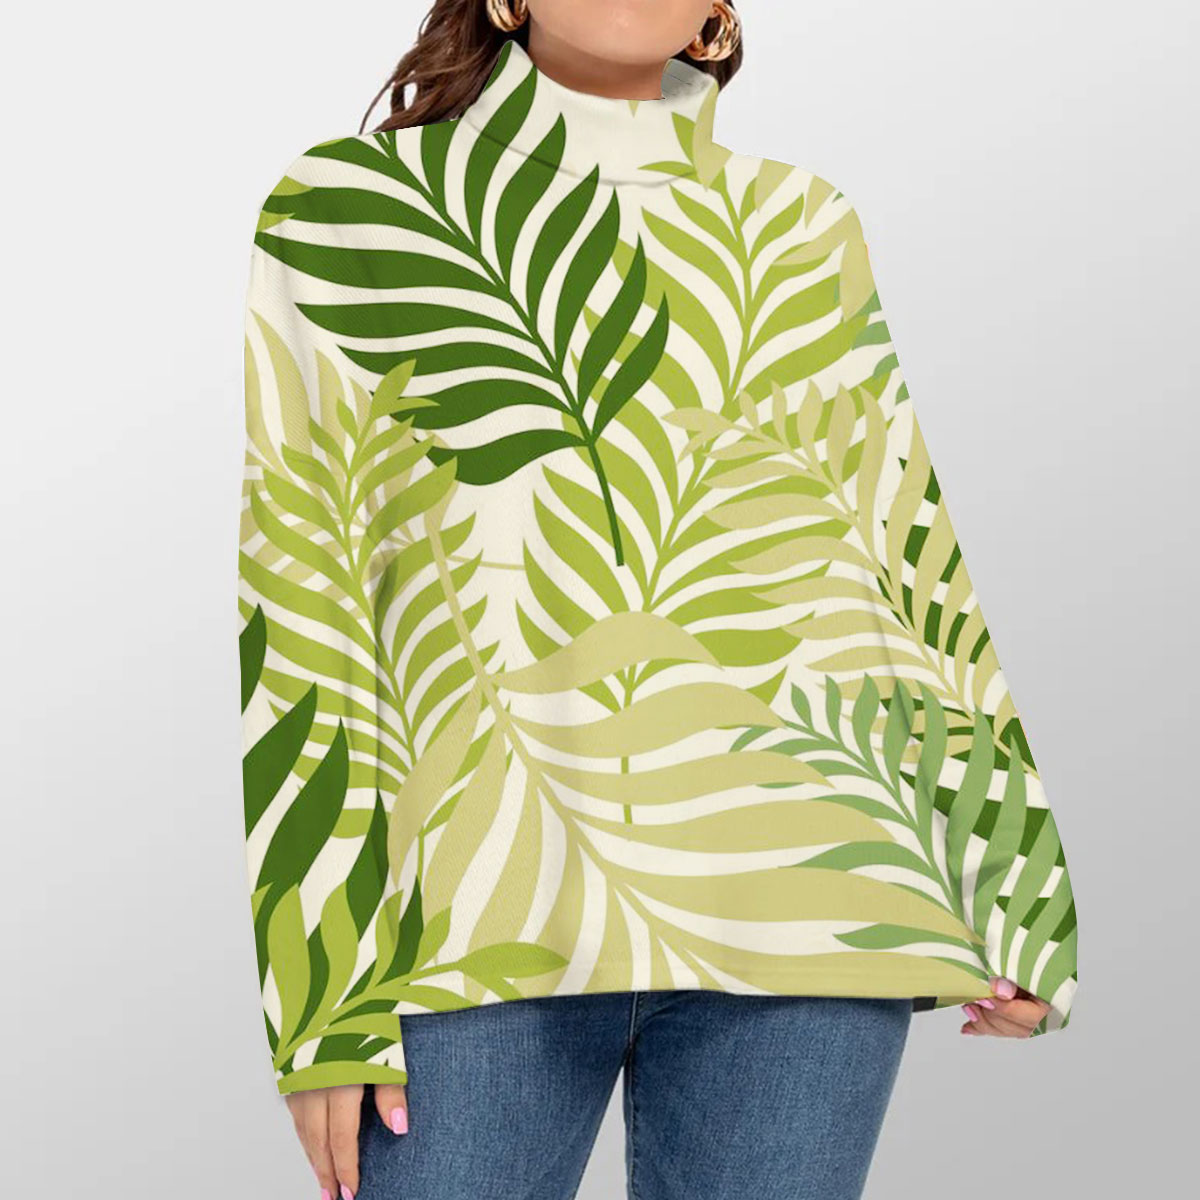 Green Palm Tree Leaves Turtleneck Sweater